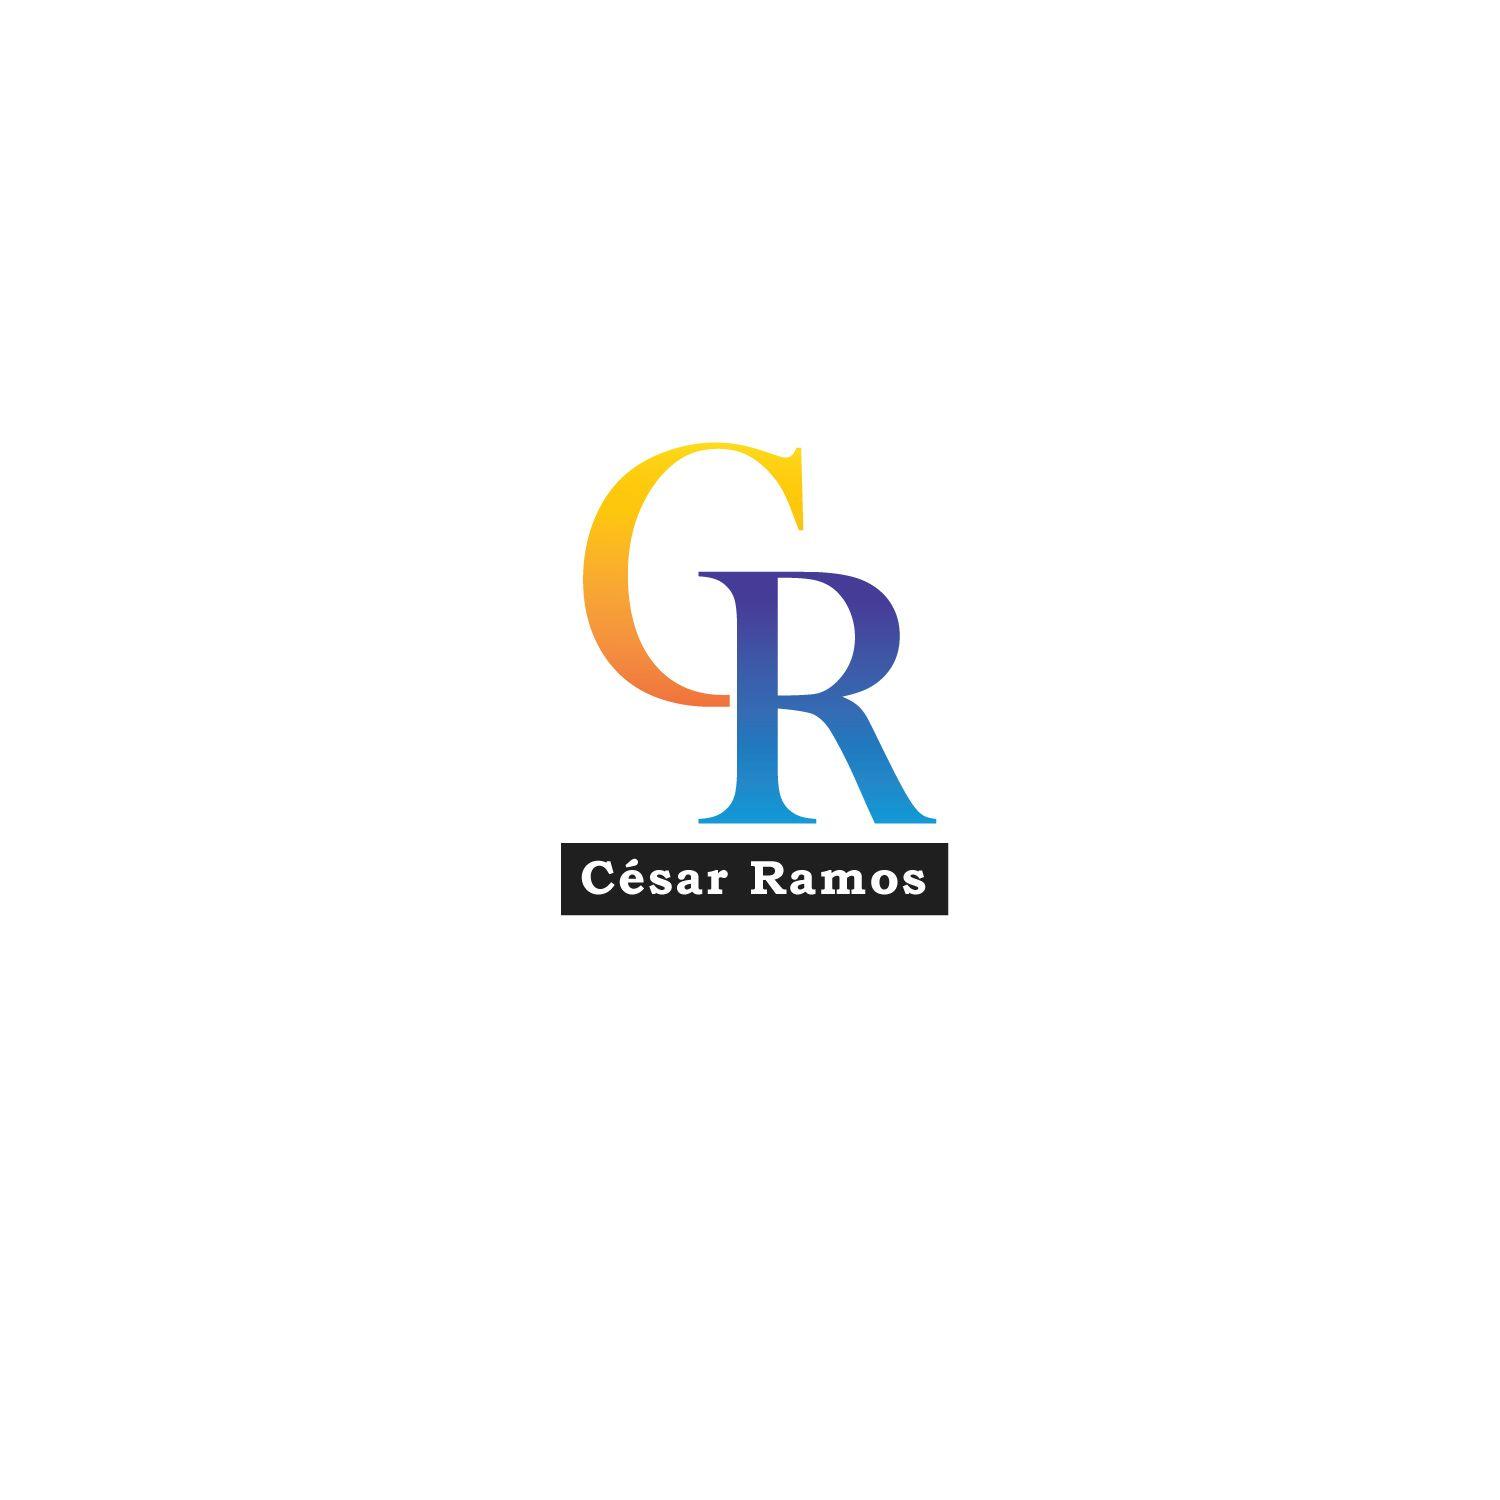 Ramos Logo - Serious, Modern, Business Management Logo Design for César Ramos by ...